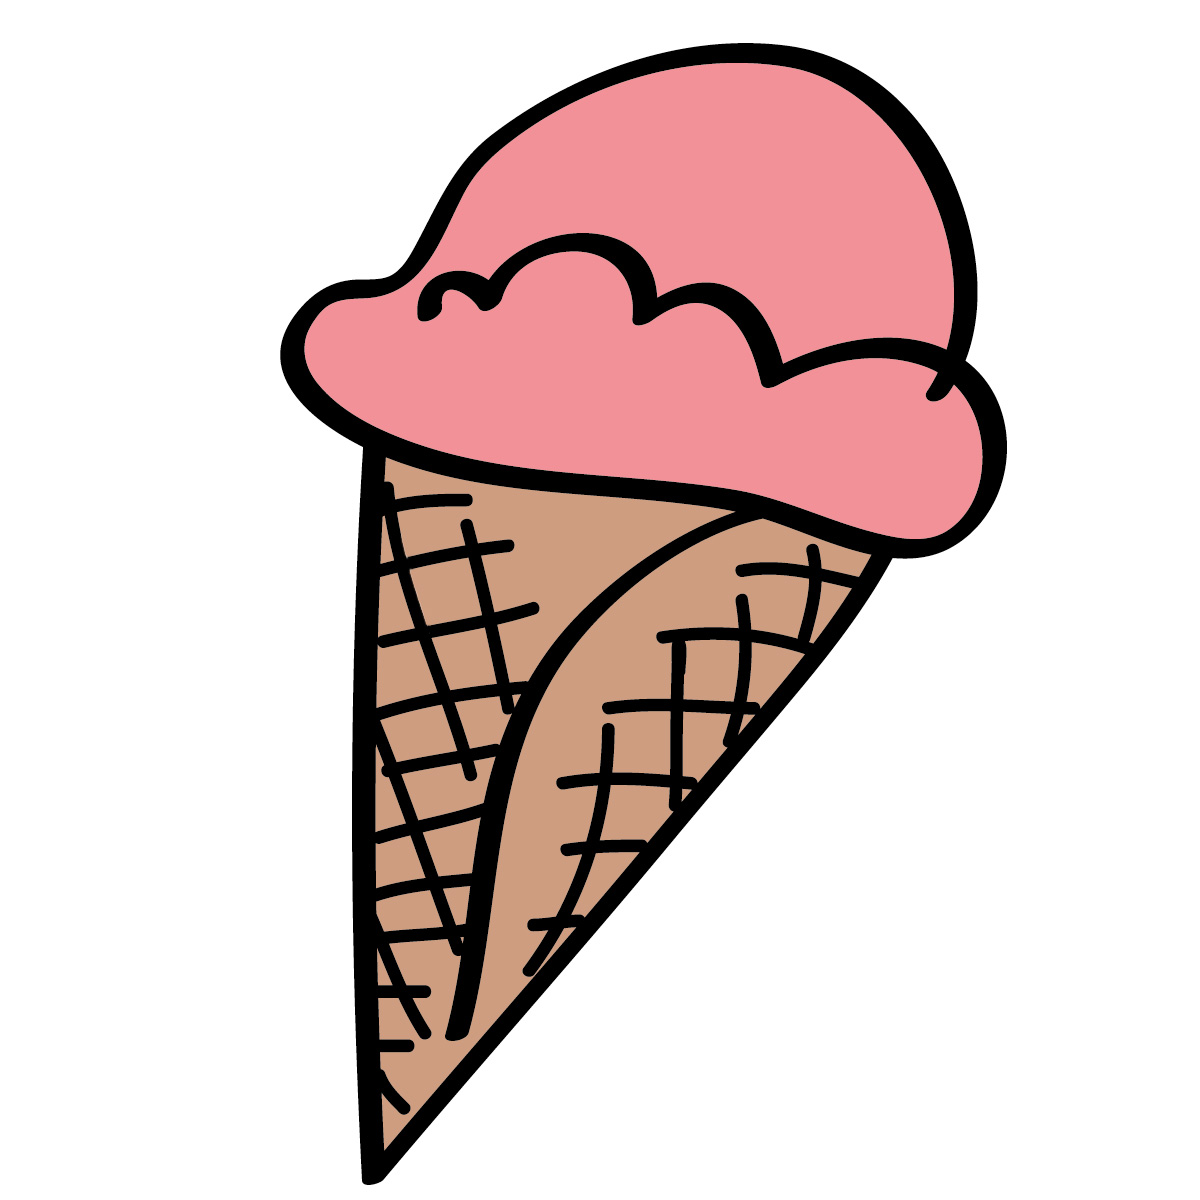 Chocolate ice cream clip art - Free Clipart Images